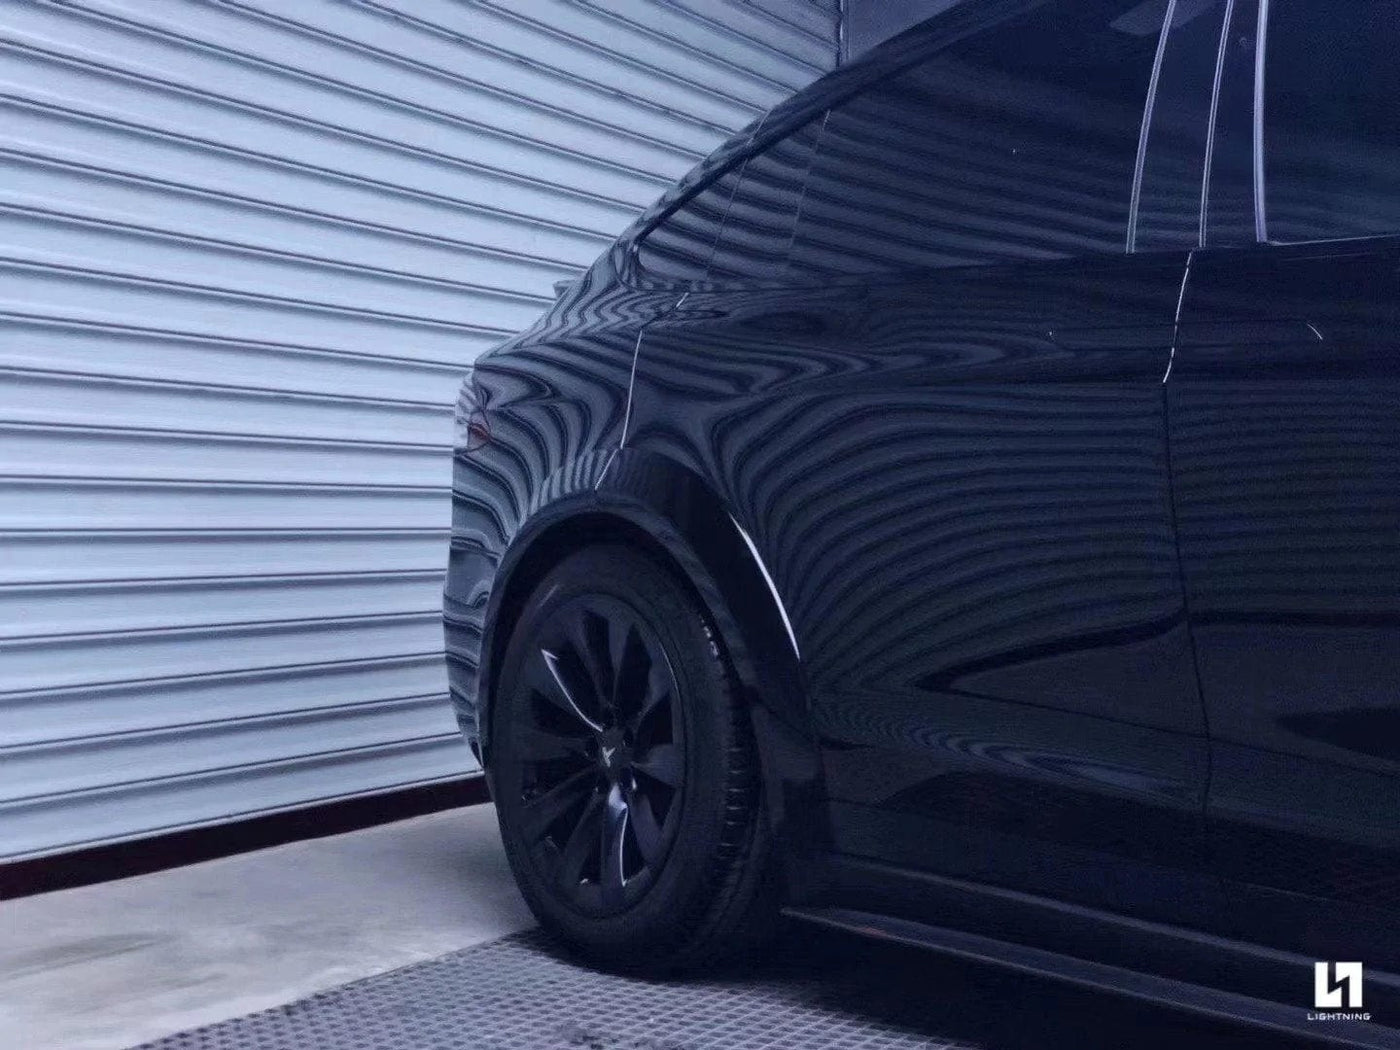 CMST Genuine Carbon Fiber Wide Body Wheel Arches For Tesla Model X 2017-2021 - PimpMyEV